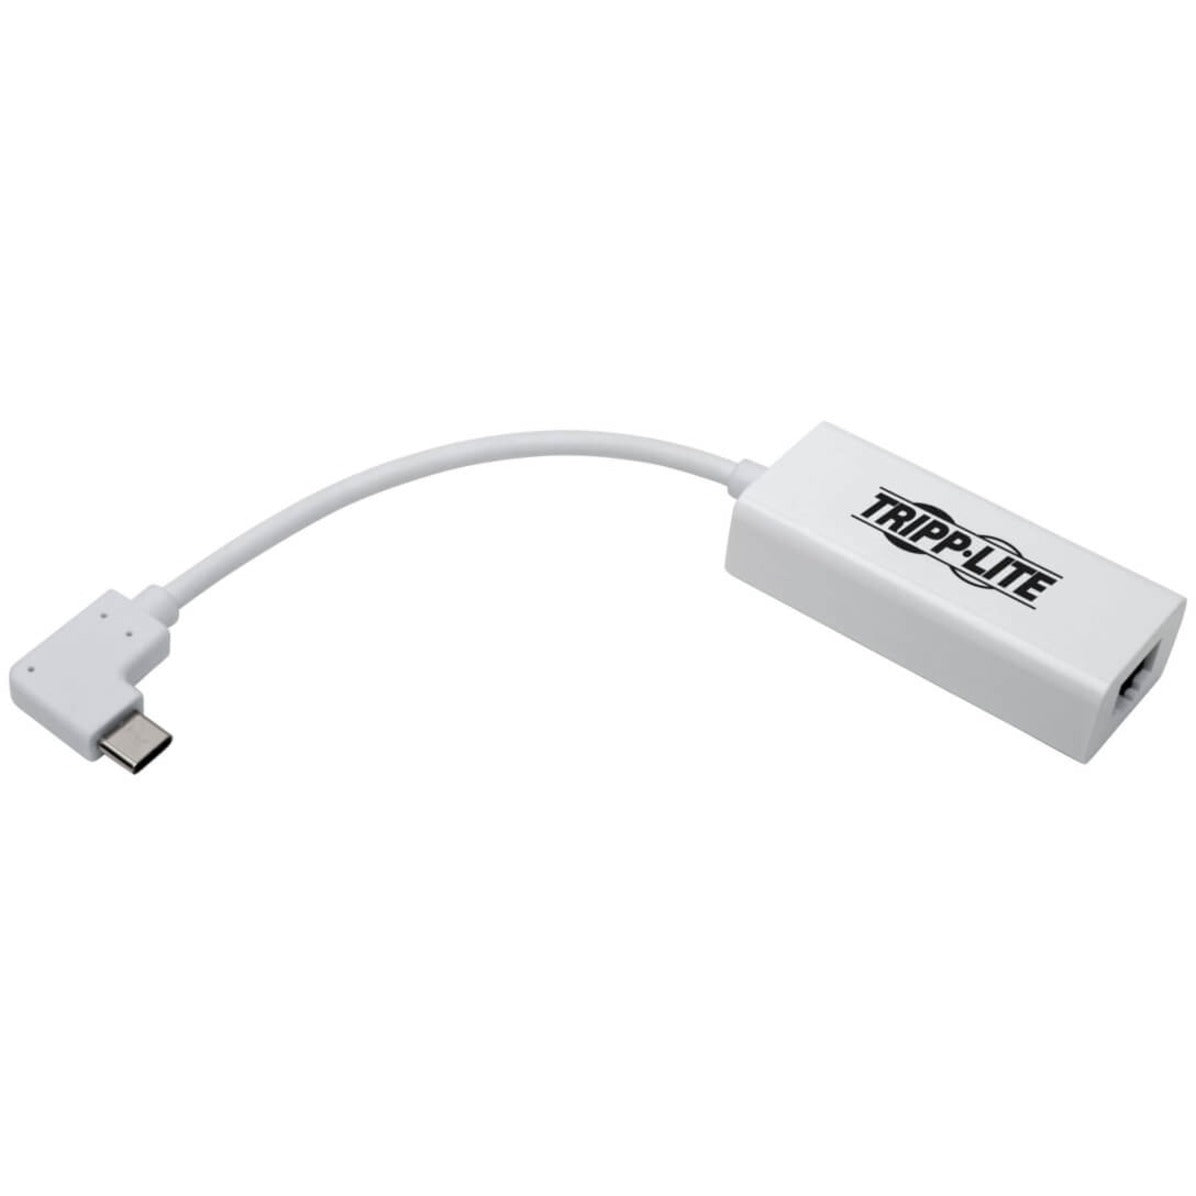 Tripp Lite U436-06N-GBW-RA Gigabit Ethernet Card USB 3.1 GEN 1 Right-Angle USB-C Adapter  트립 라이트 U436-06N-GBW-RA 기가비트 이더넷 카드 USB 3.1 GEN 1 우각 USB-C 어댑터